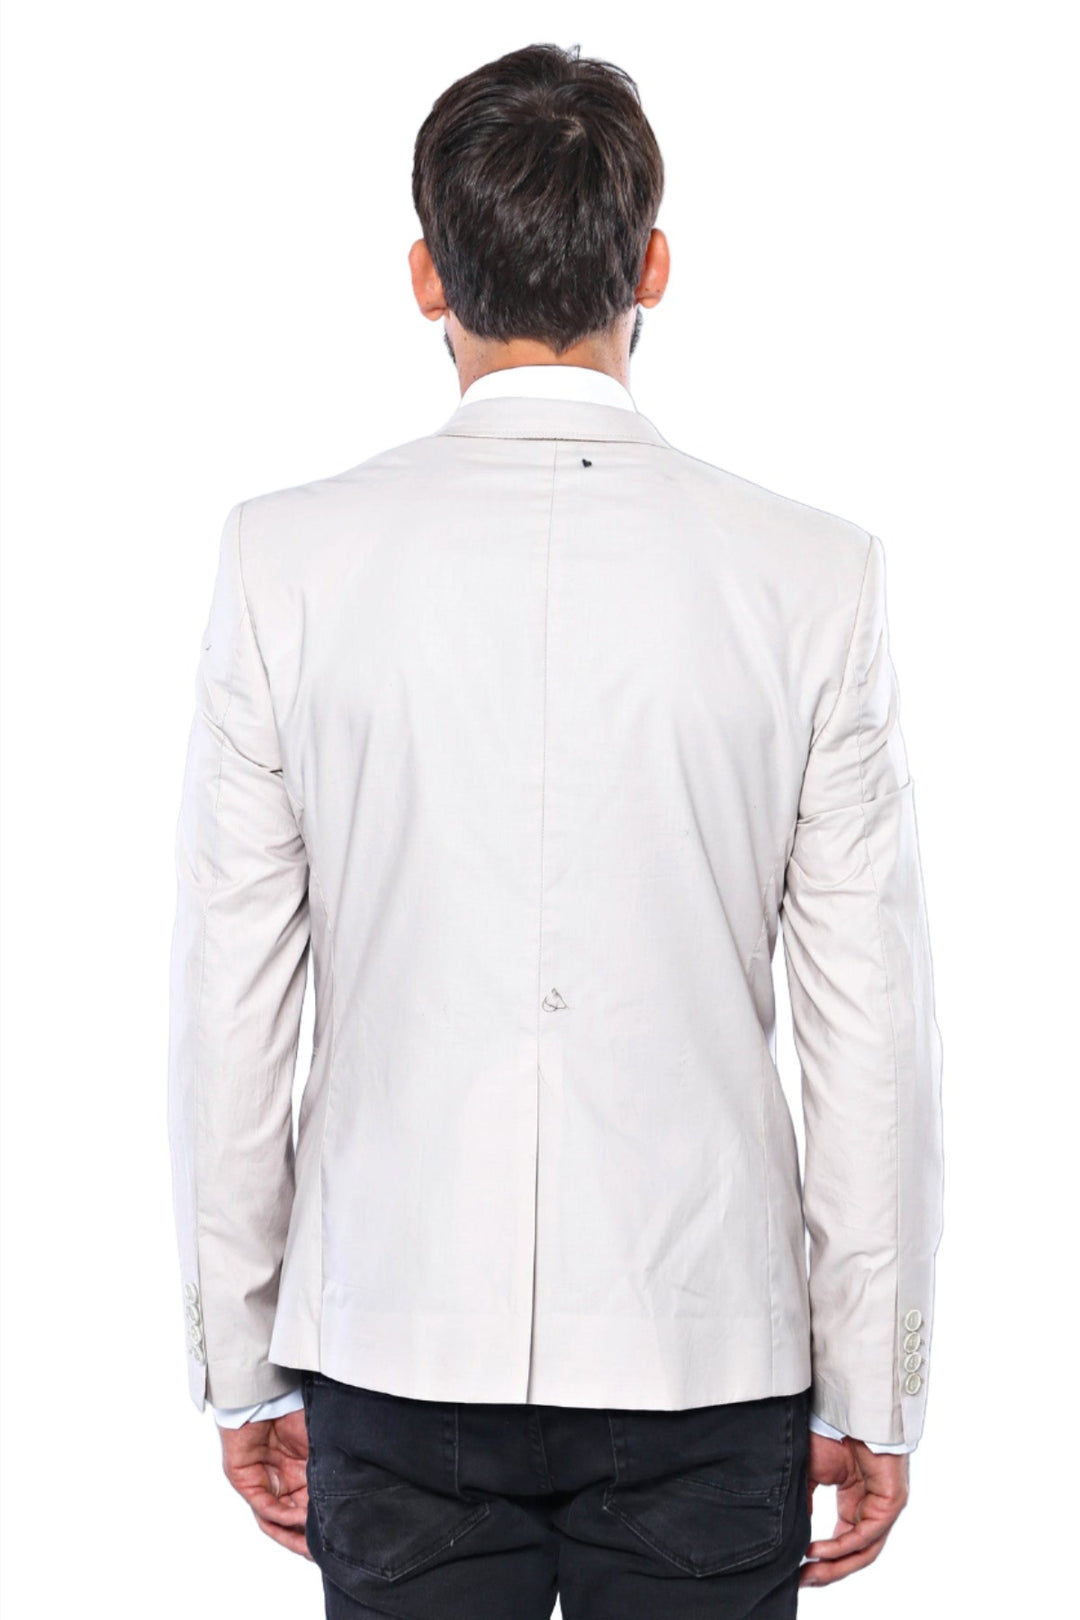 3 pocket Single Button Cotton Grey Jacket-Wessi